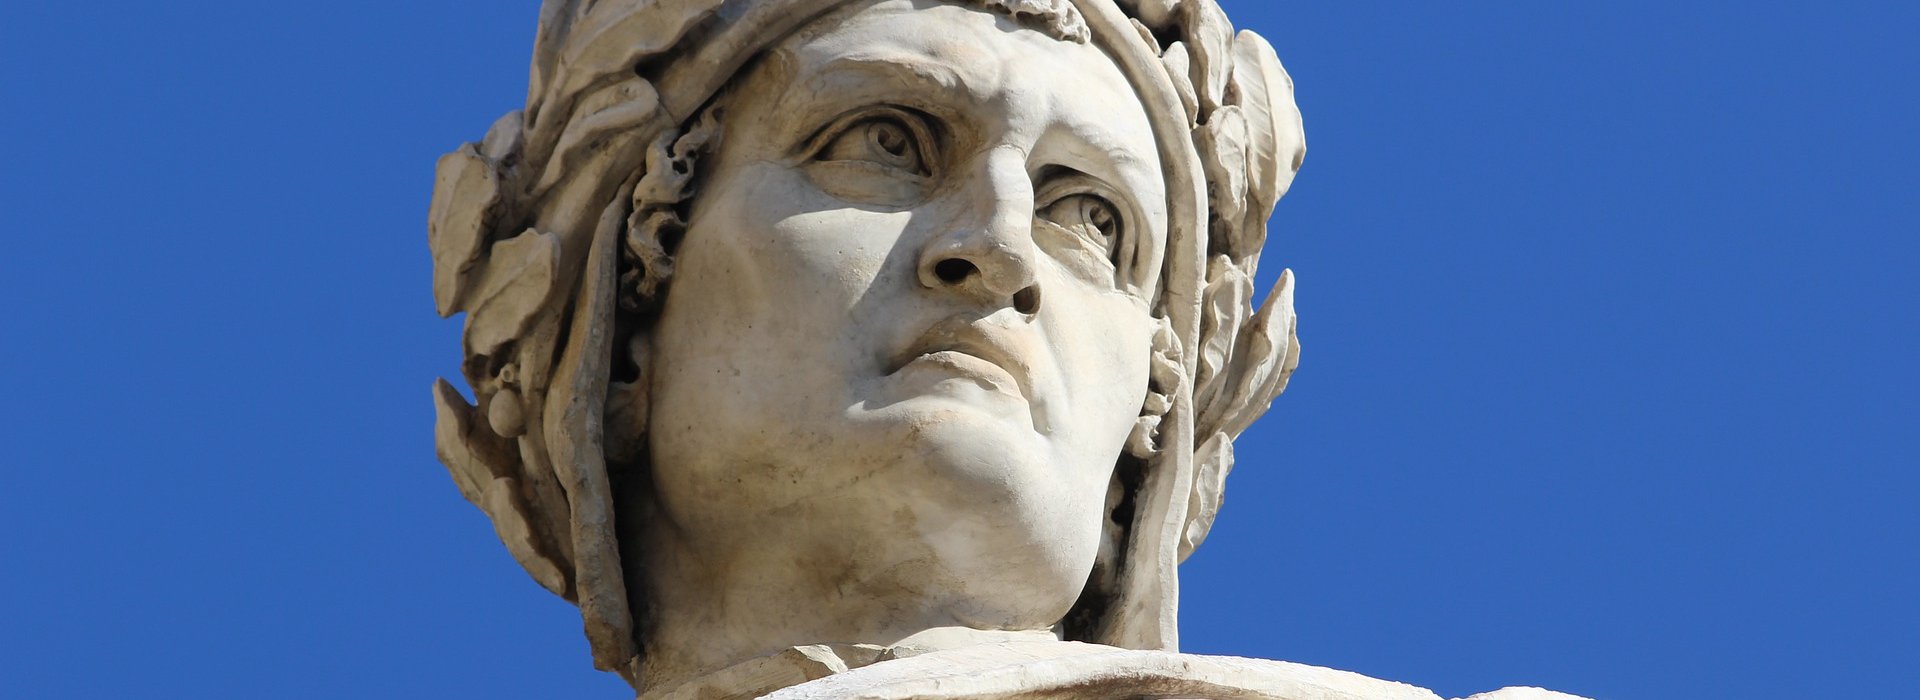 Guided tour of Dante Alighieri's Florence